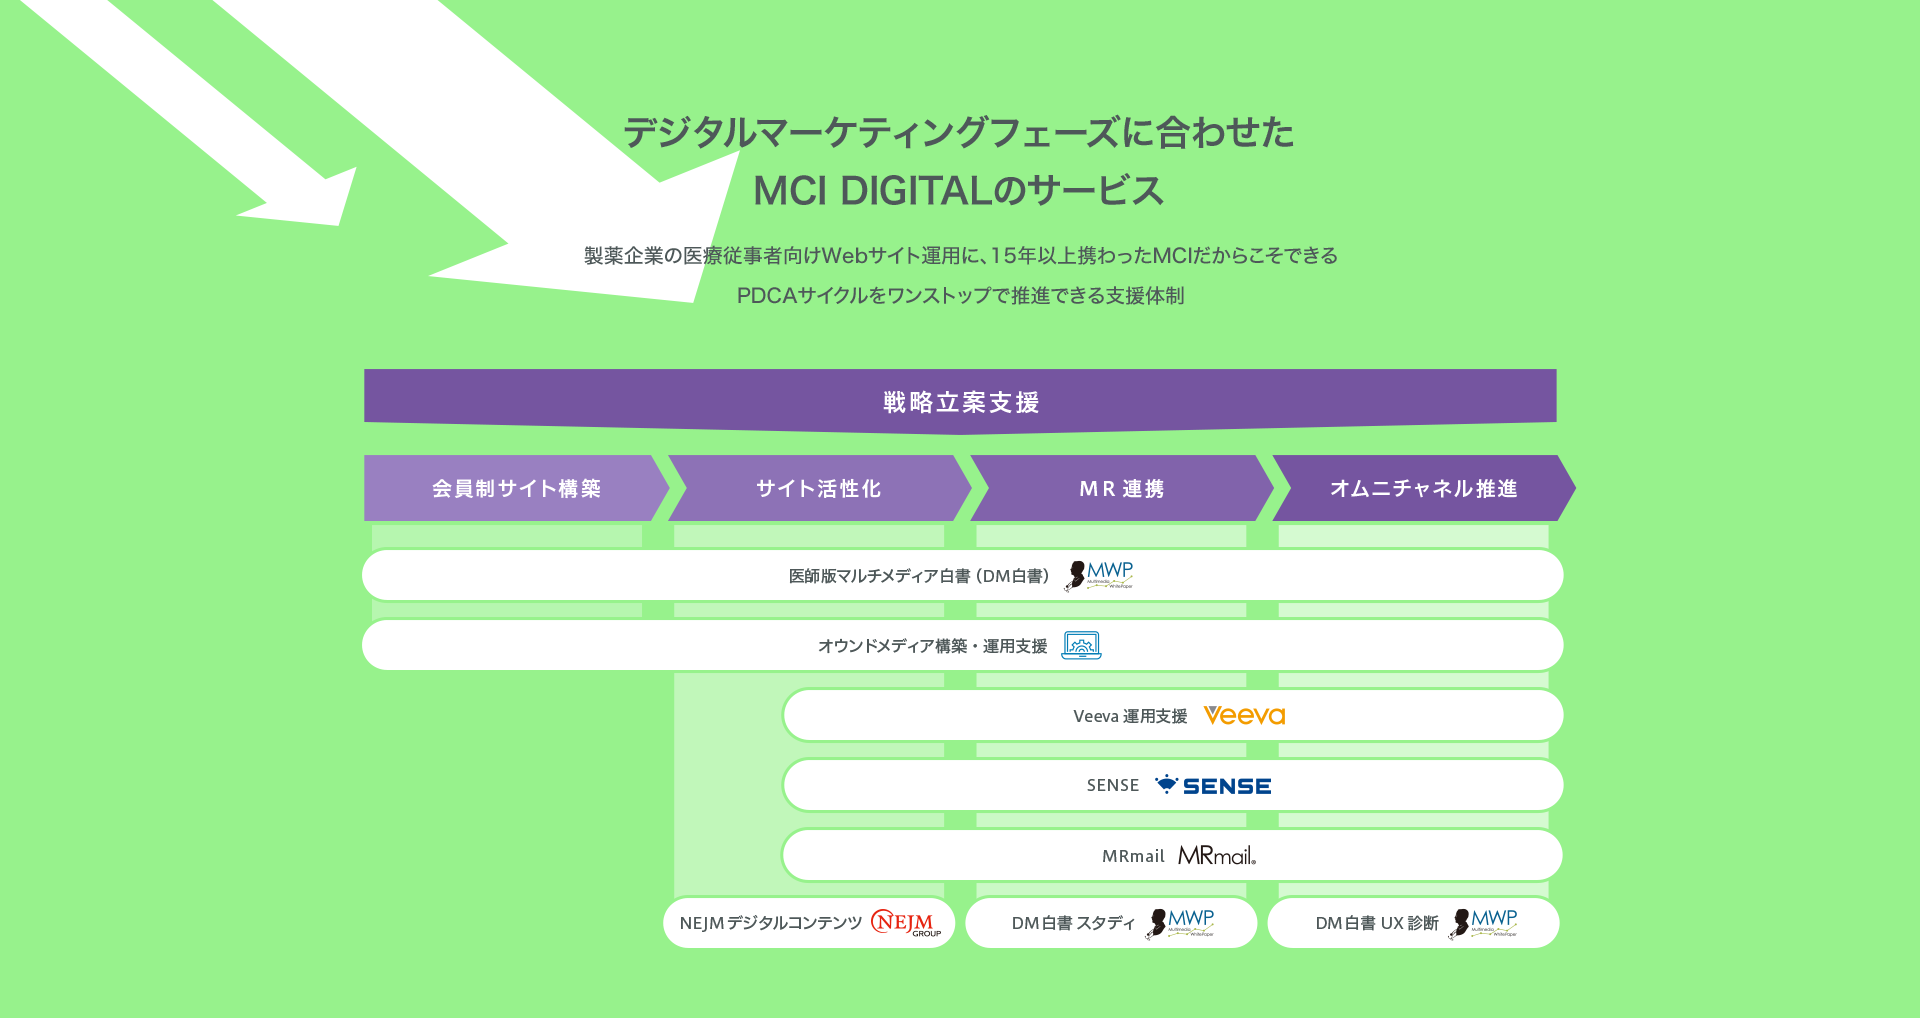 MCI DIGITALが支援するサービス群一覧